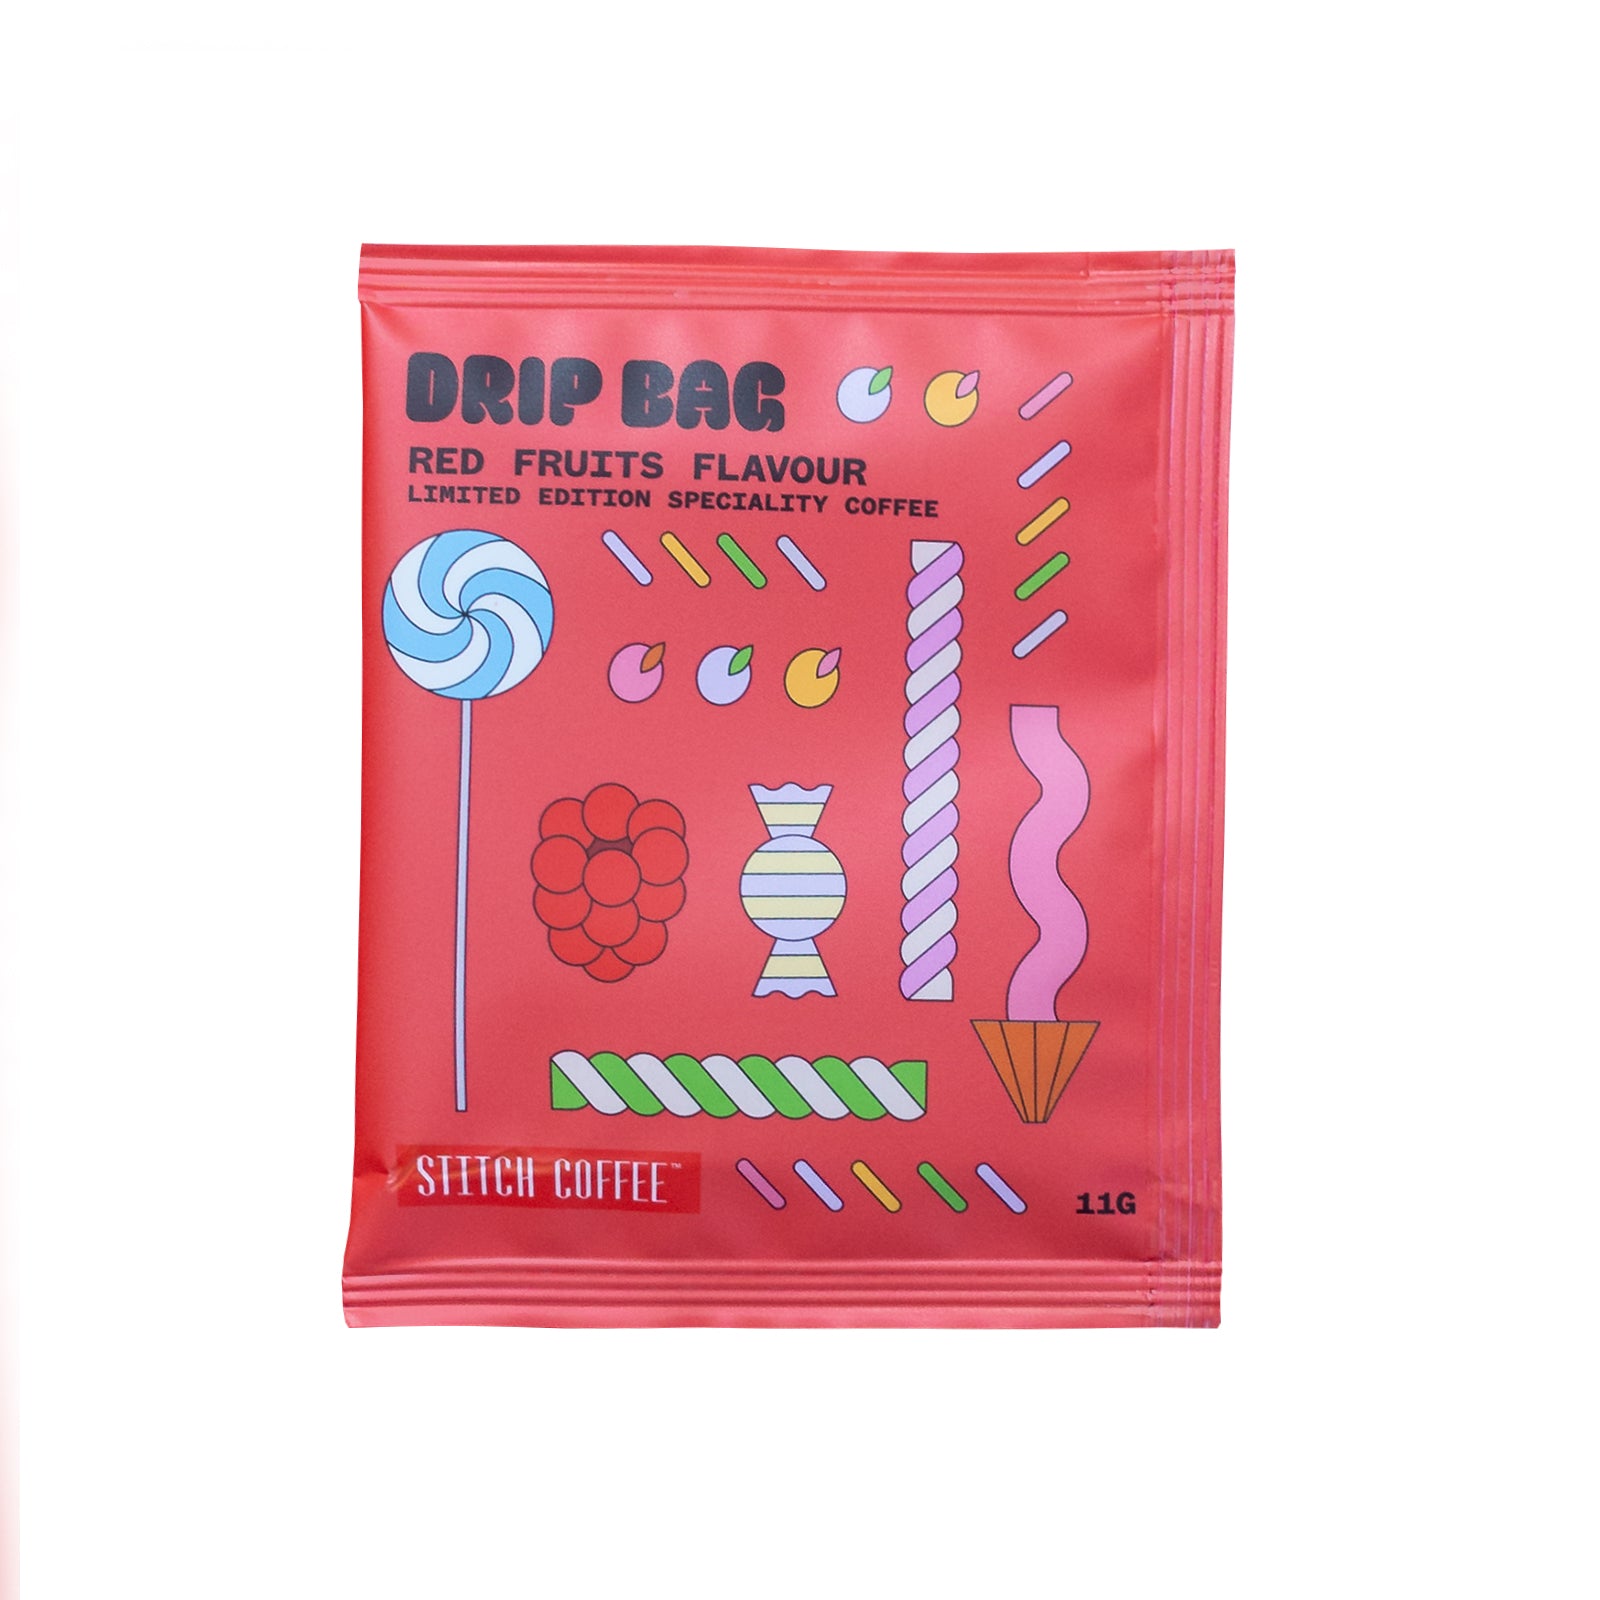 Isshu-kan Lollipop Coffee Drip Bags